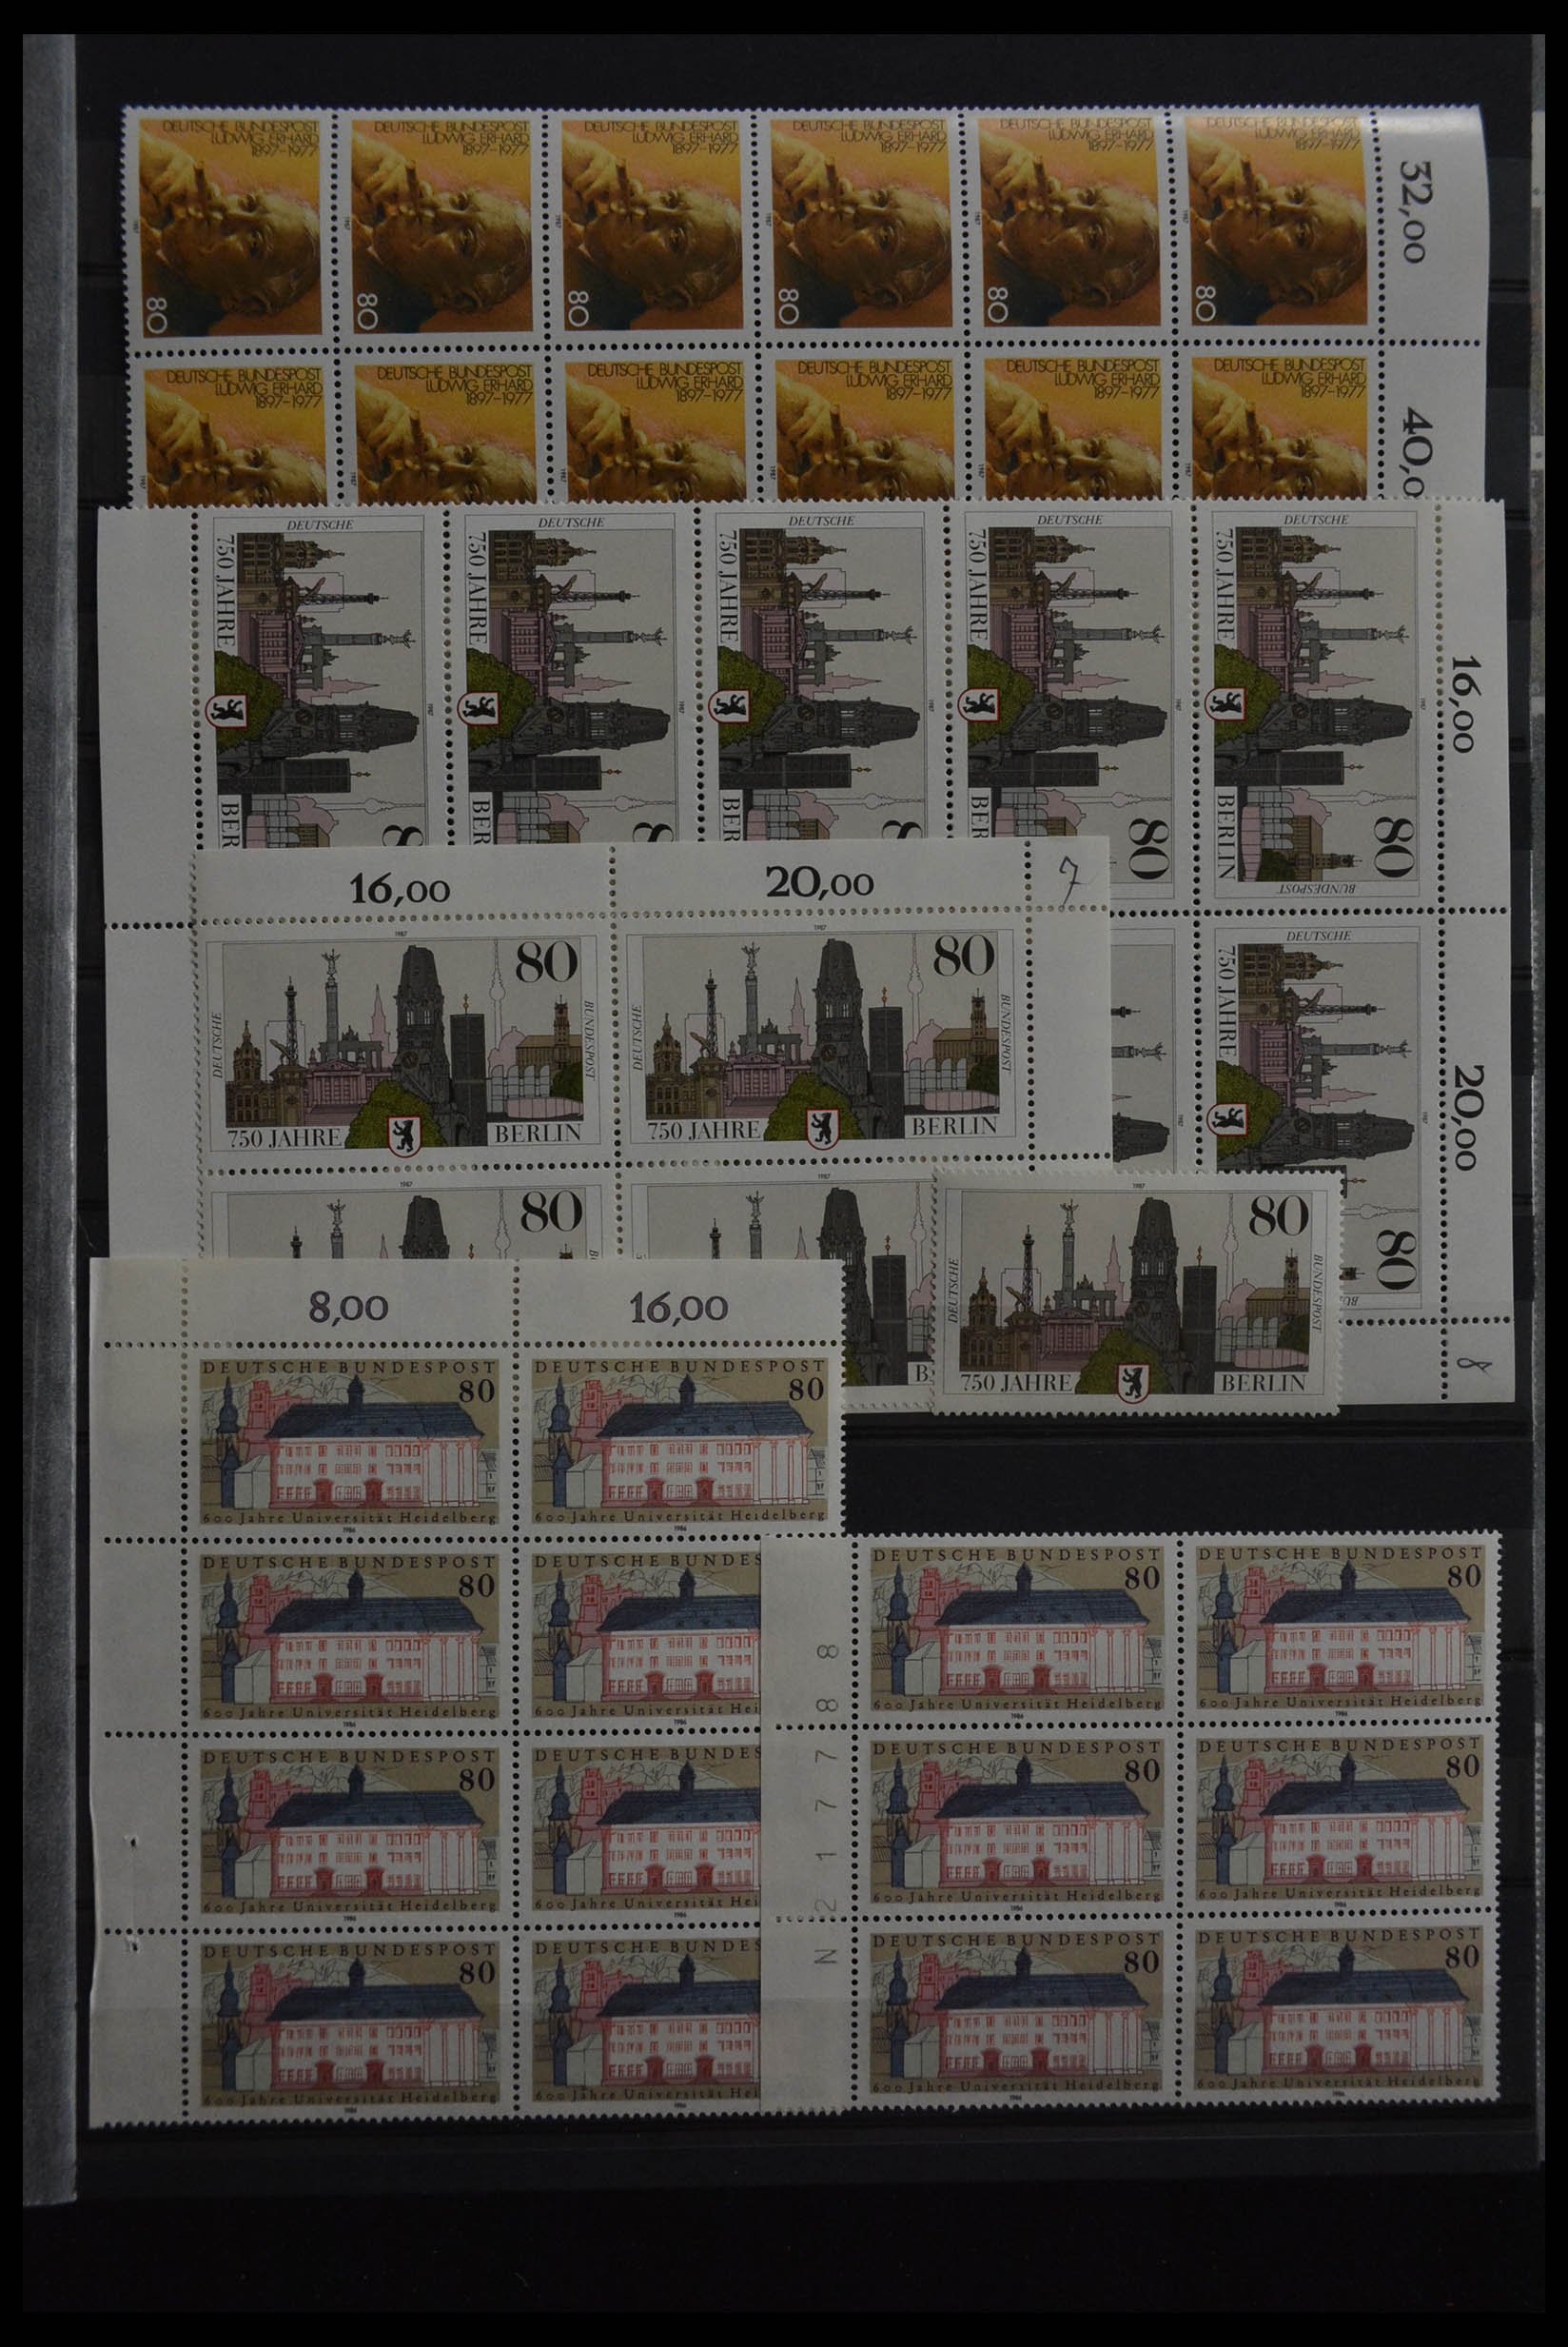 28379 151 - 28379 Bundespost 1958-2000 postfrisse stock.